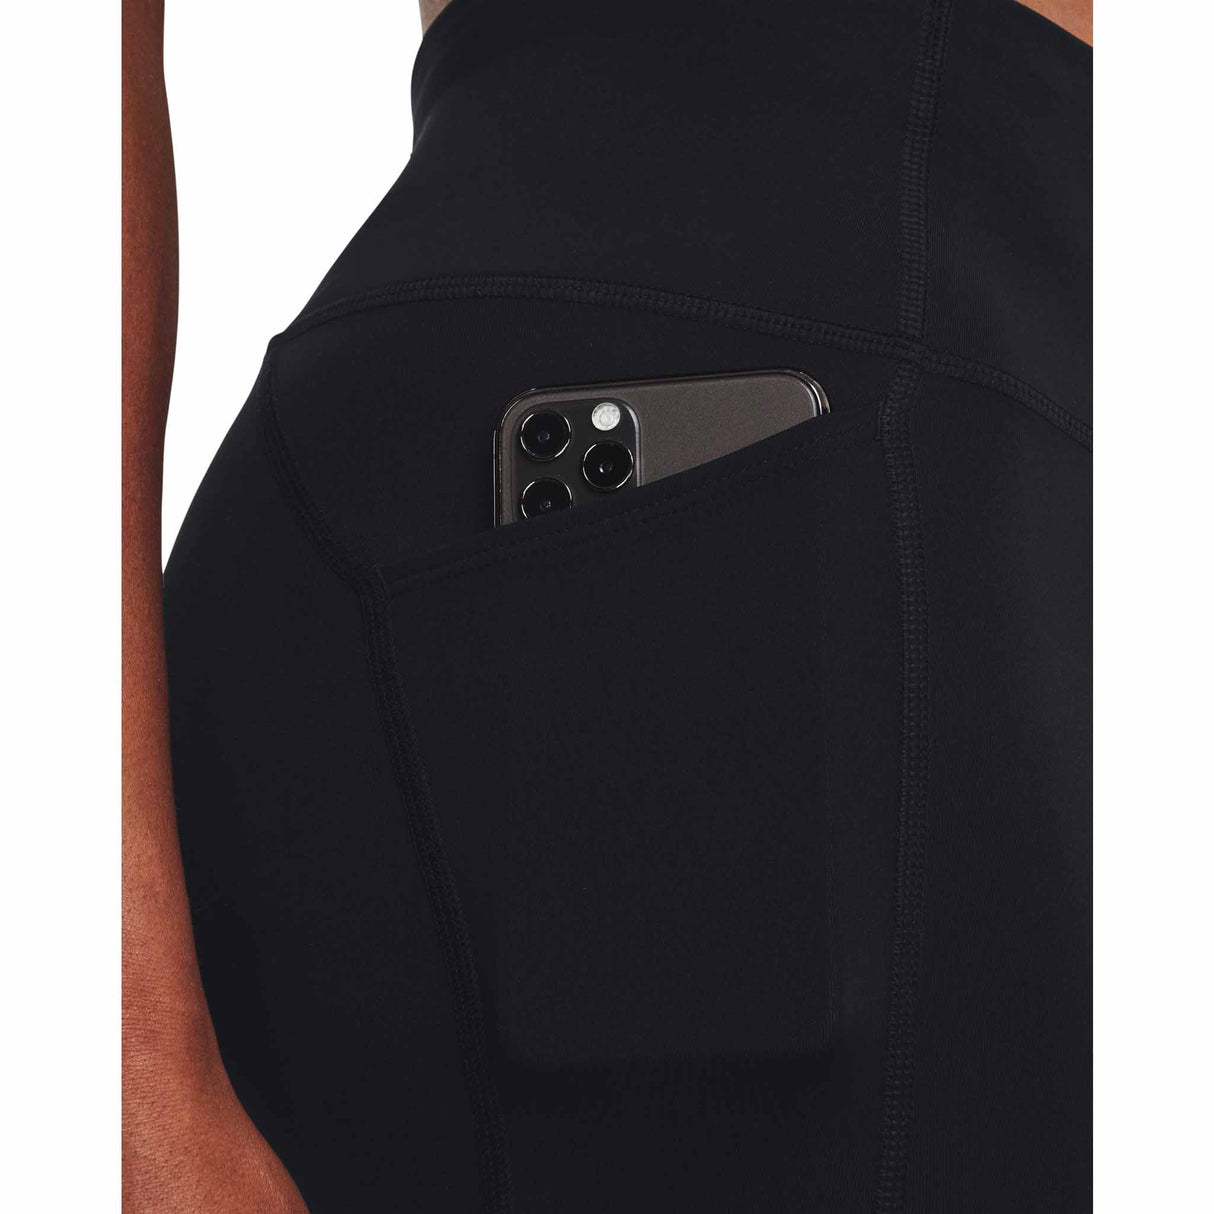 UA Fly Fast 3.0 collants à la cheville femme pochette- black / reflective